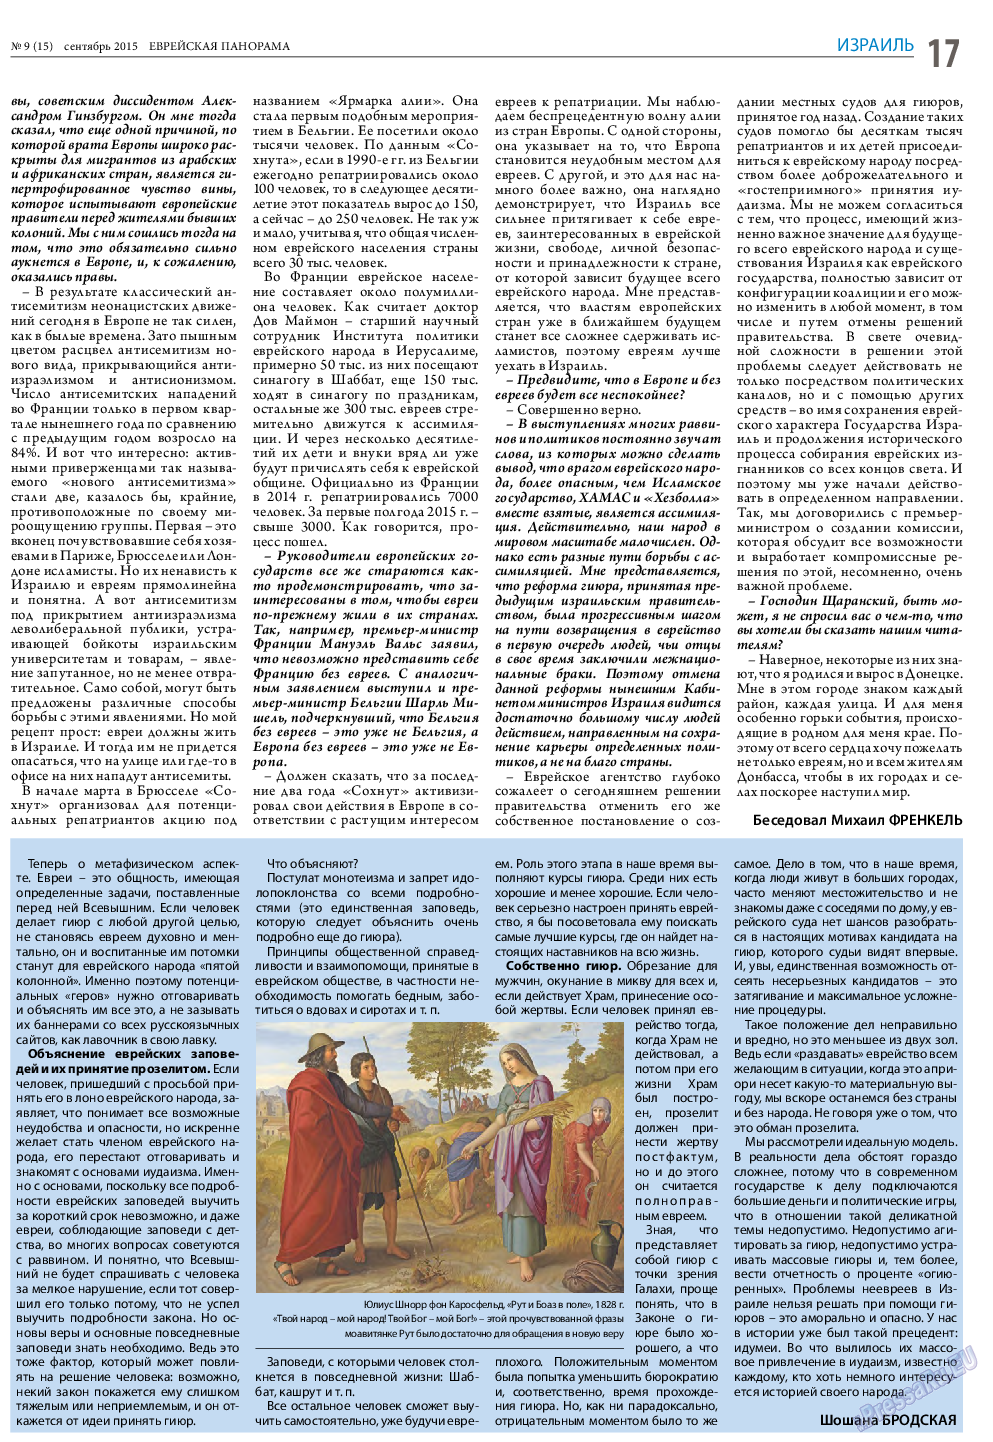 Еврейская панорама, газета. 2015 №9 стр.17